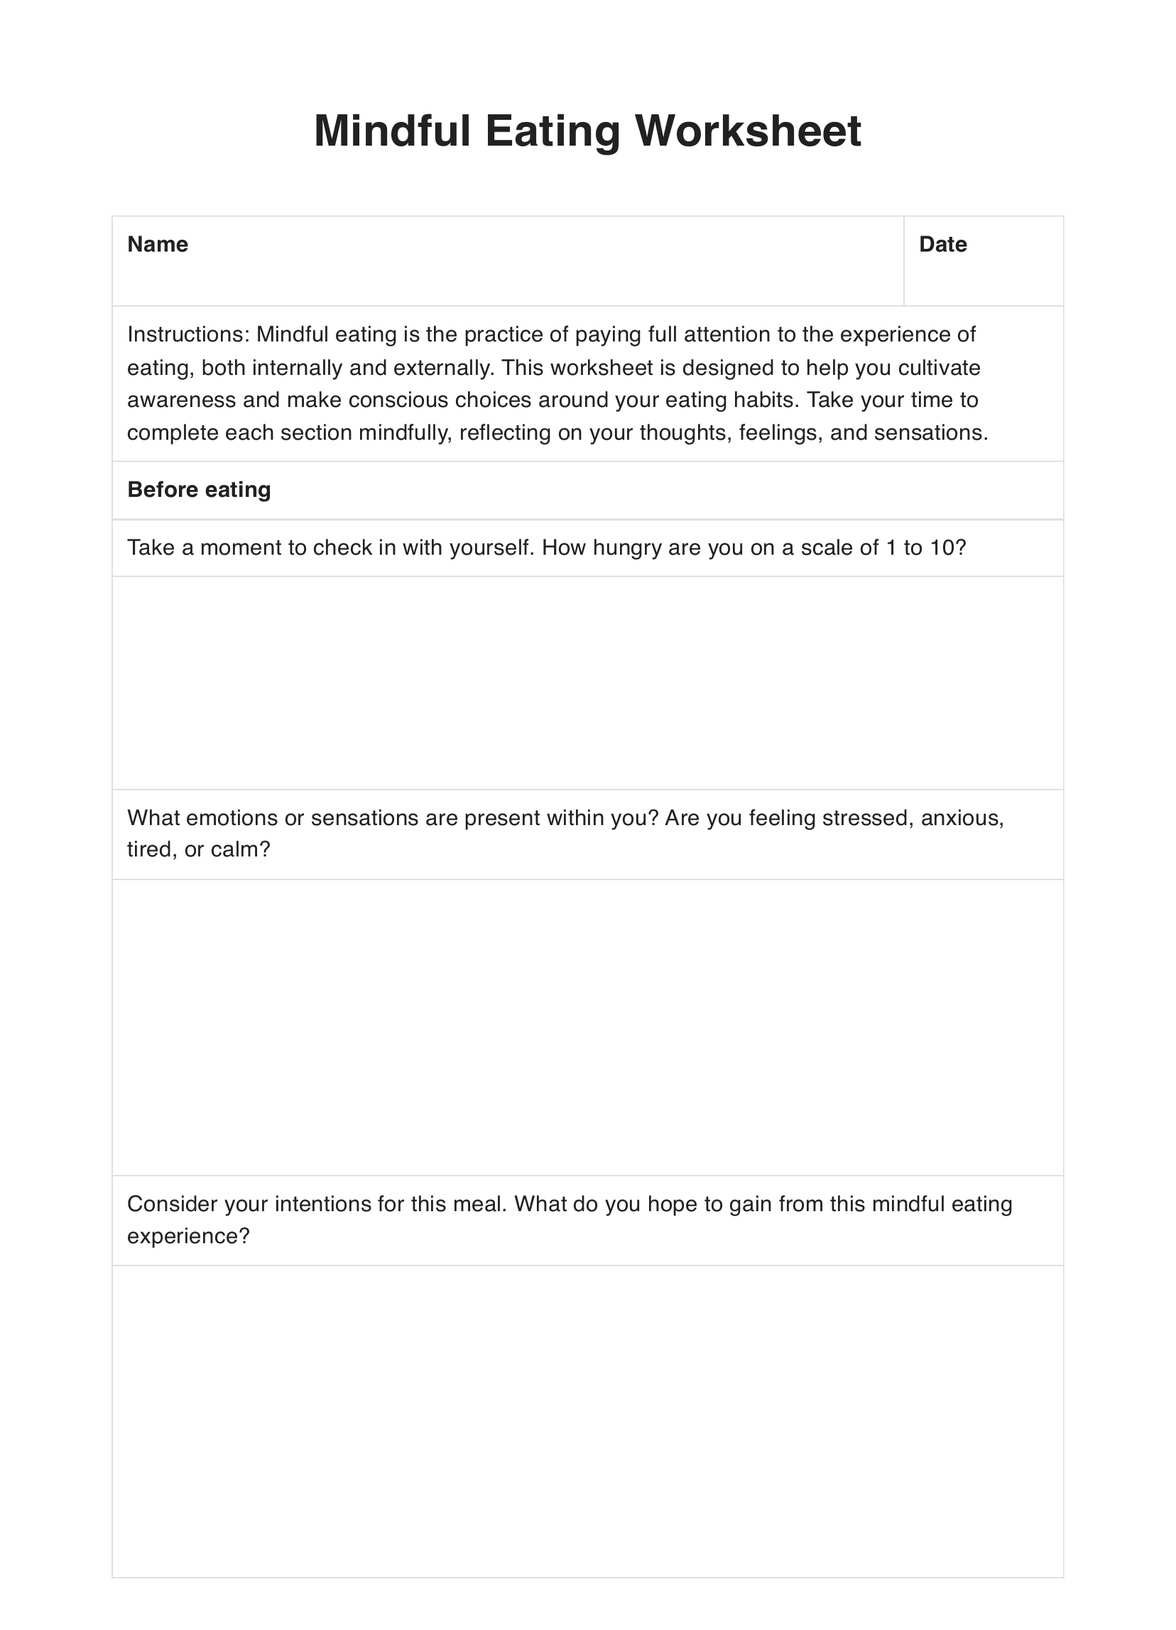 Mindful Eating Worksheet PDF Example